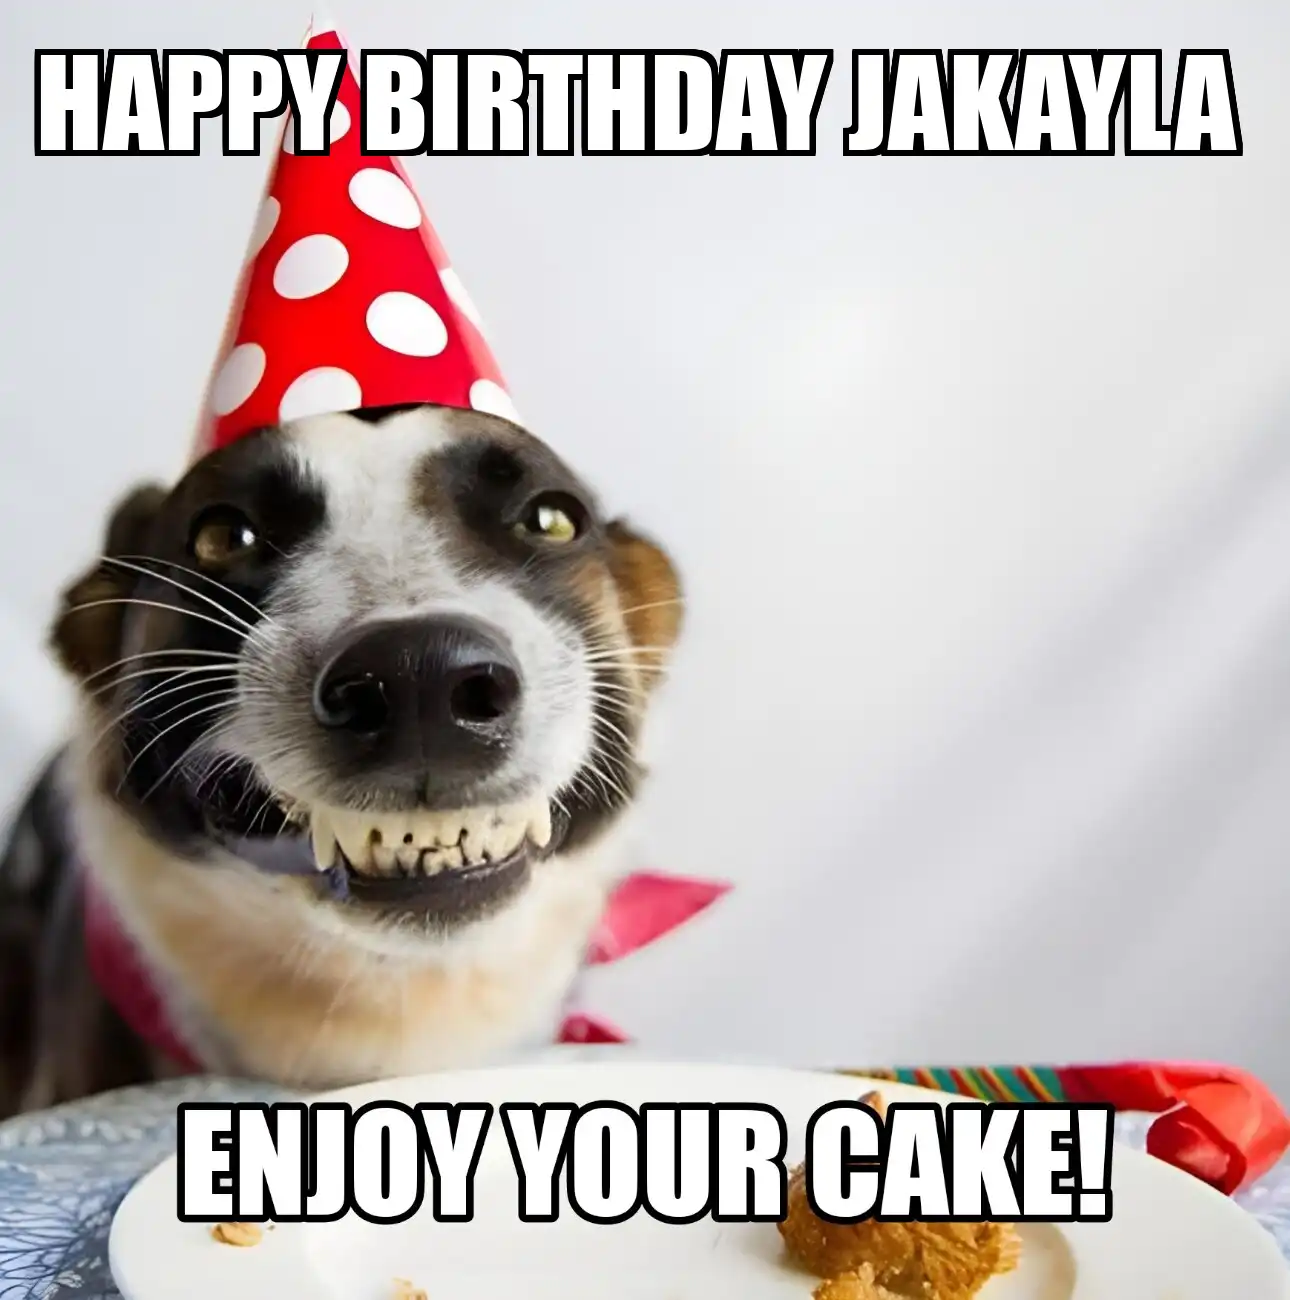 Happy Birthday Jakayla Enjoy Your Cake Dog Meme